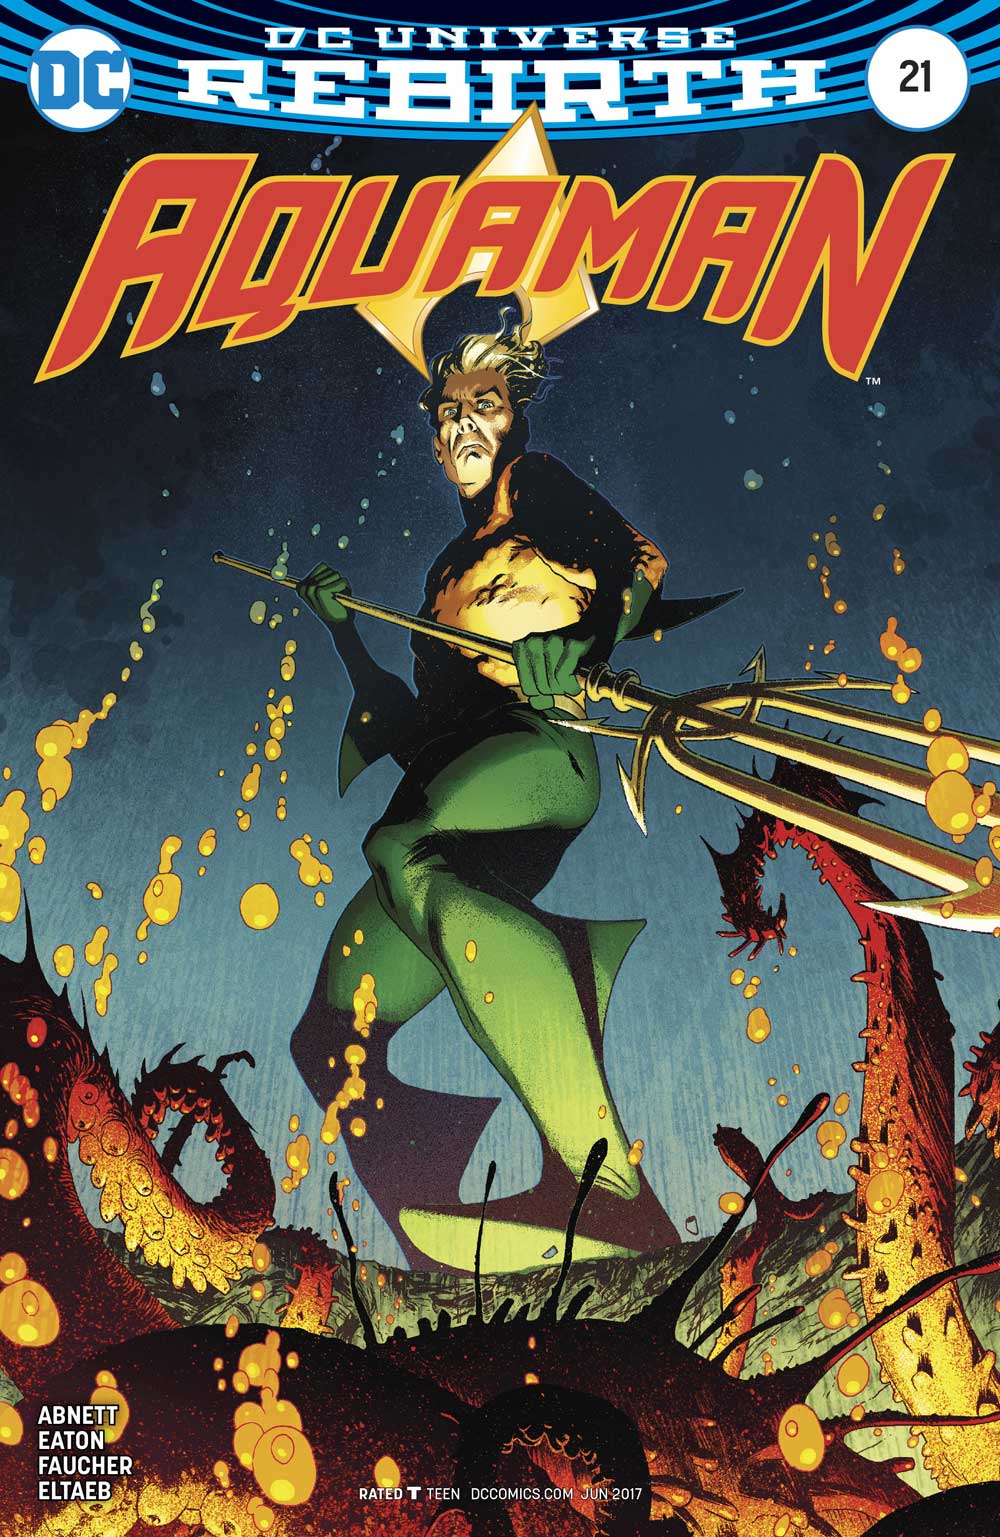 Aquaman #21 Variant cover by Joshua Middleton